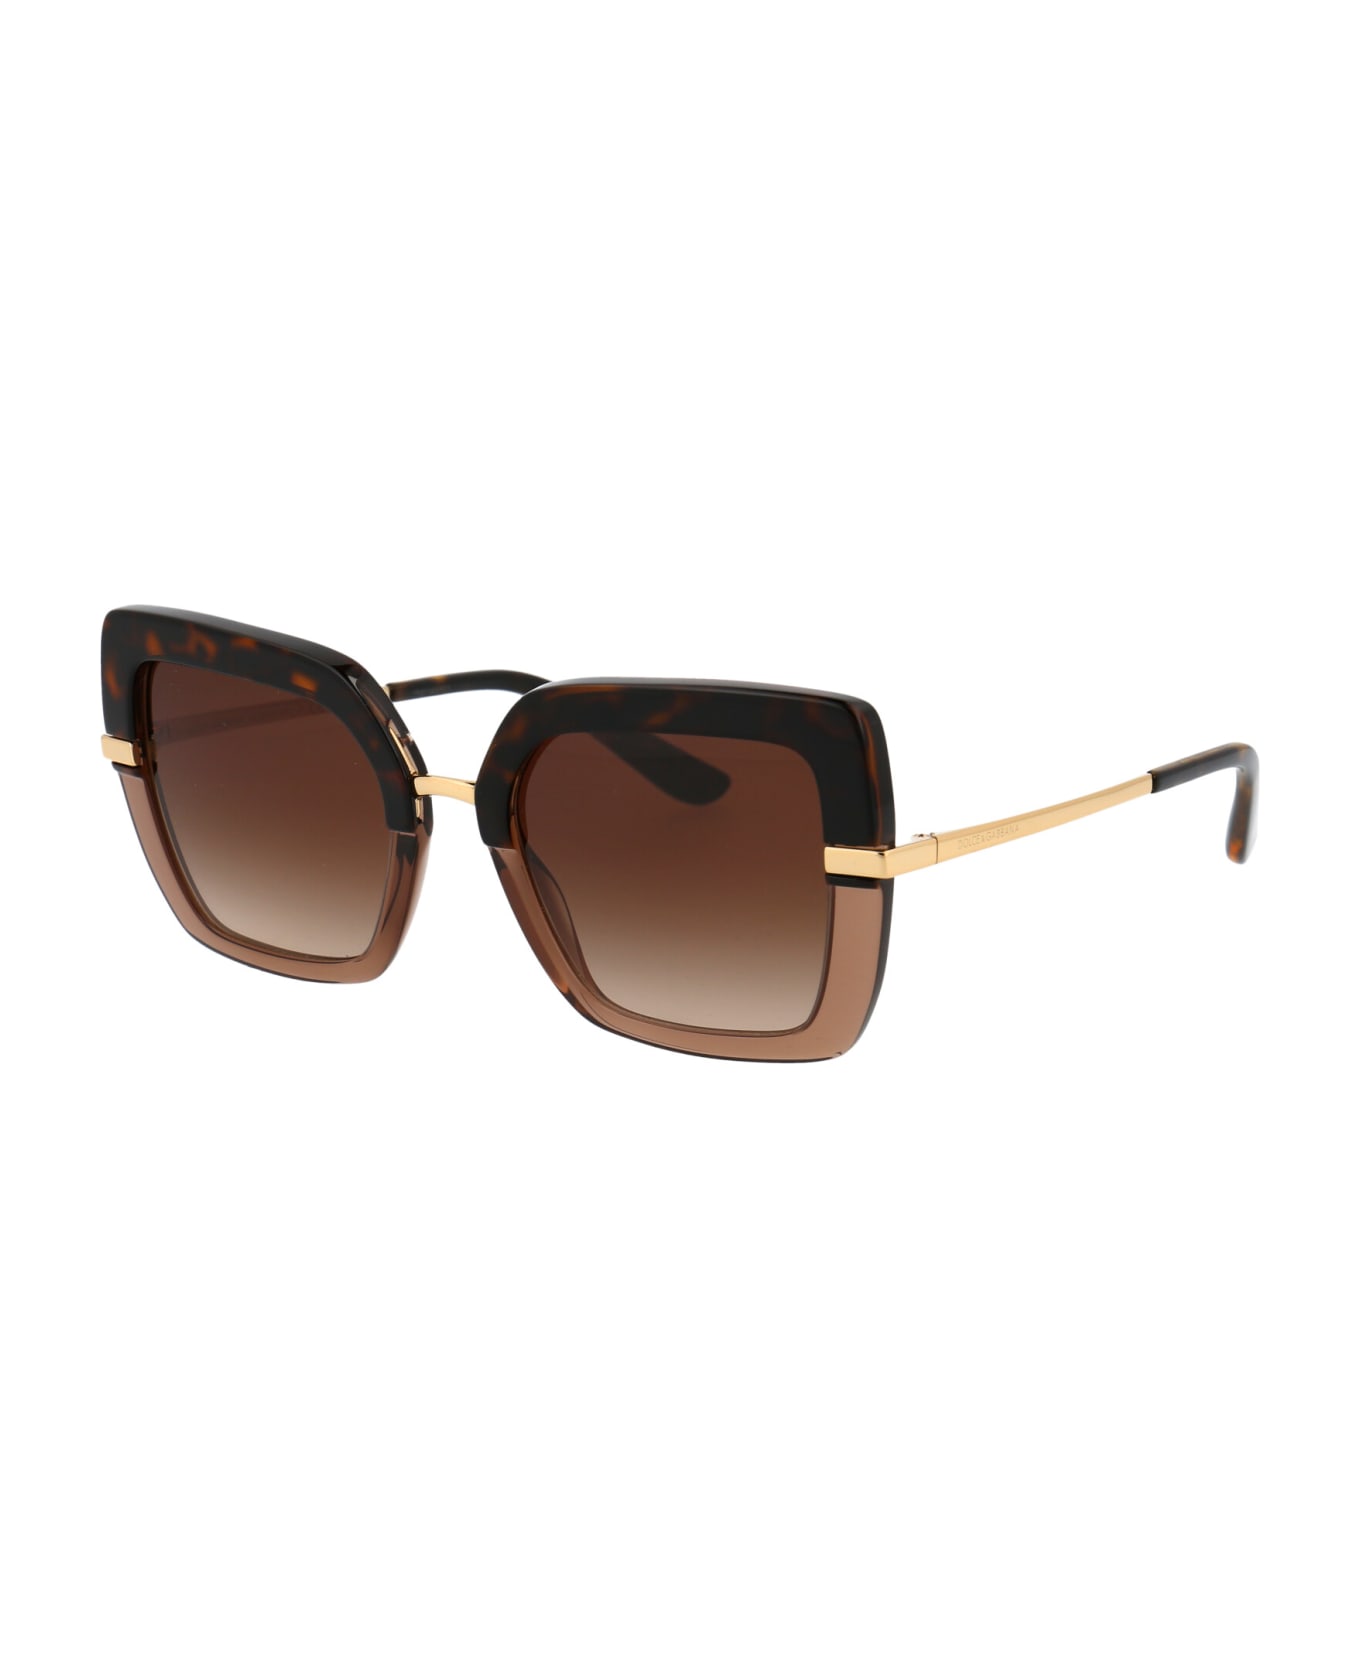 Dolce & Gabbana Eyewear 0dg4373 Sunglasses - 325613 HAVANA ON TRANSPARENT BROWN